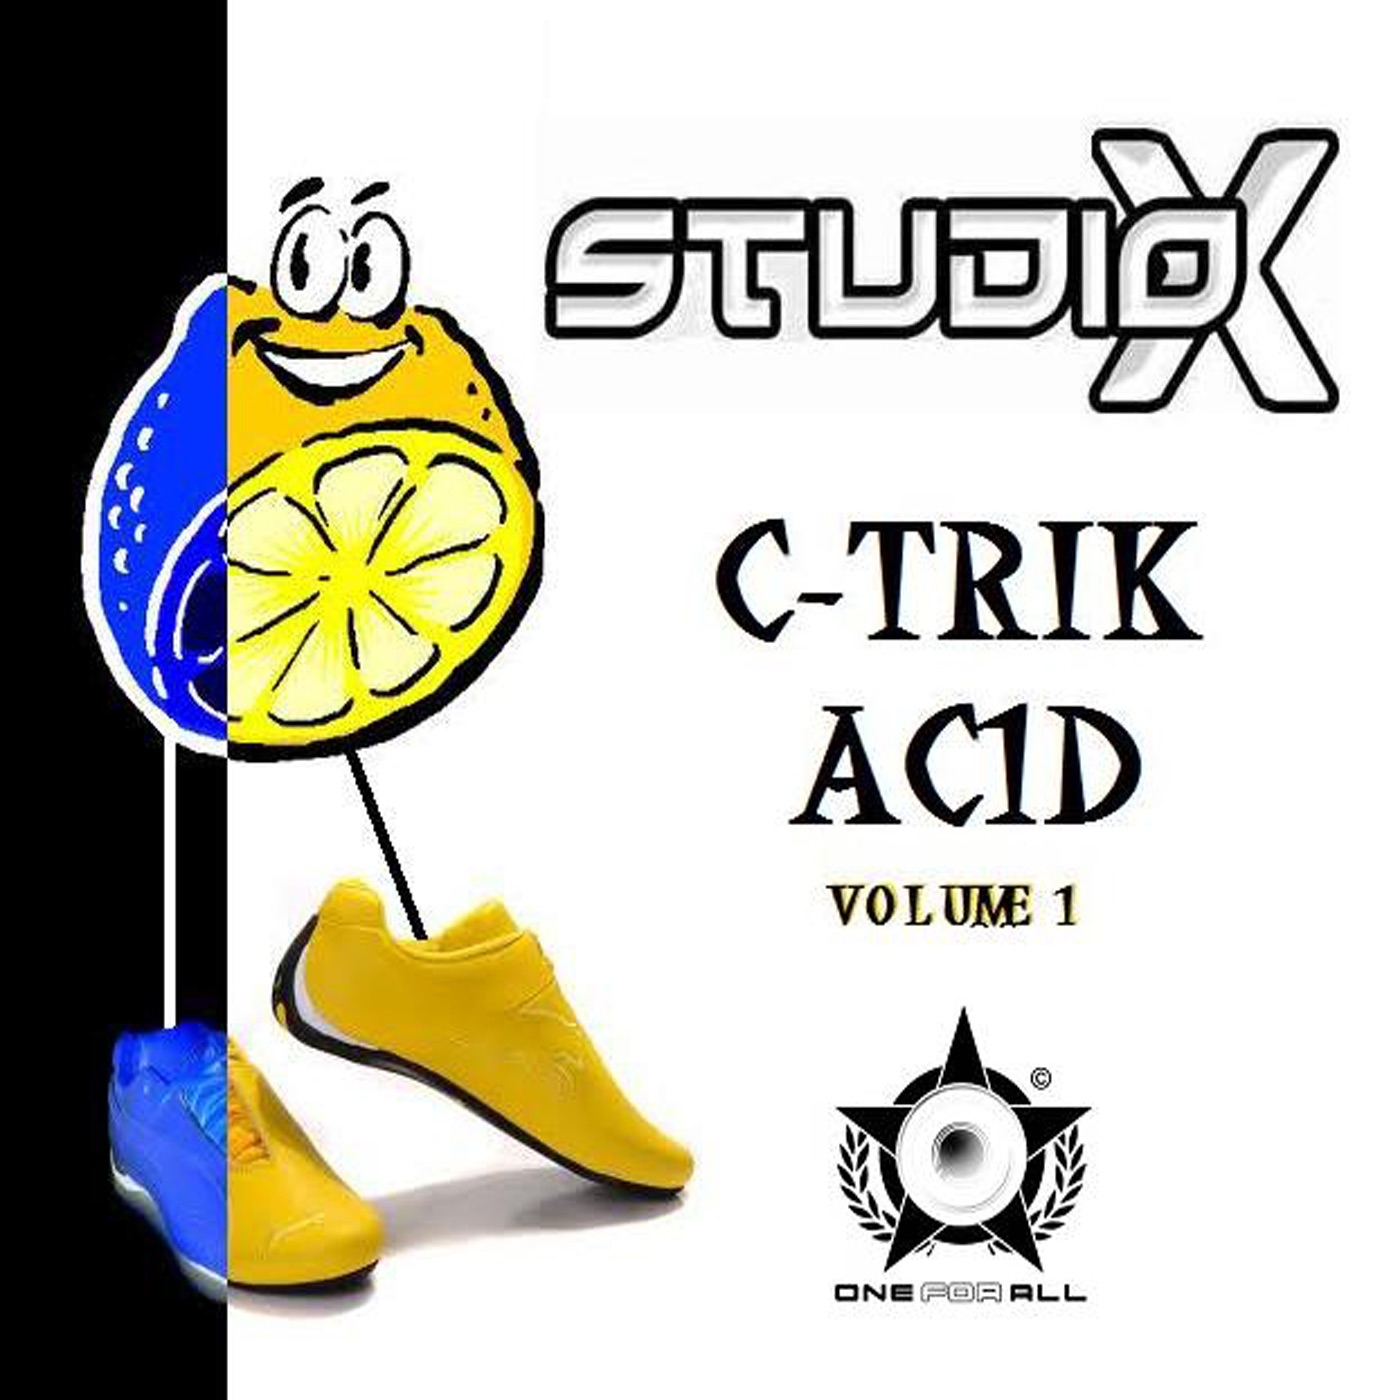 Studio-X - Be With You  (Club Remix Feat Nikki)